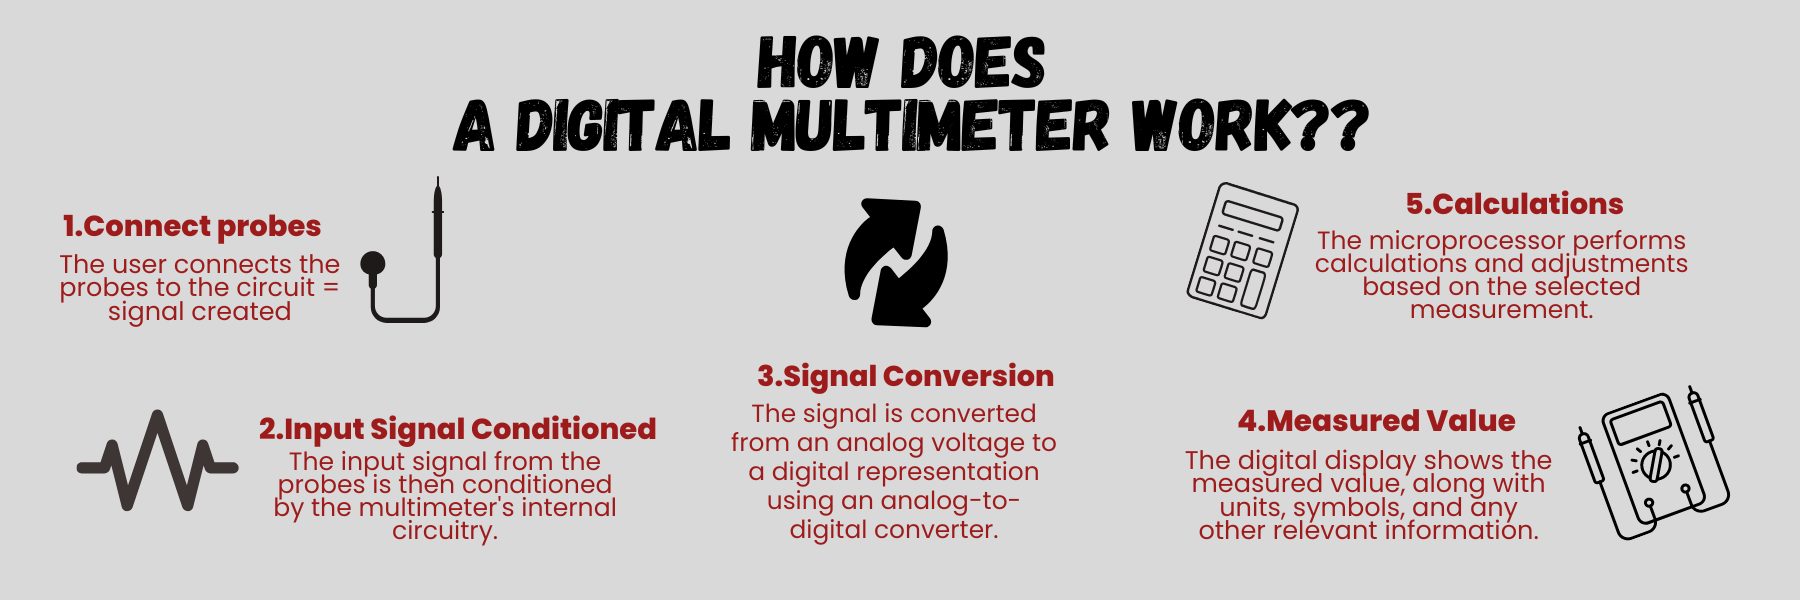 How Does a Digital Multimeter Work